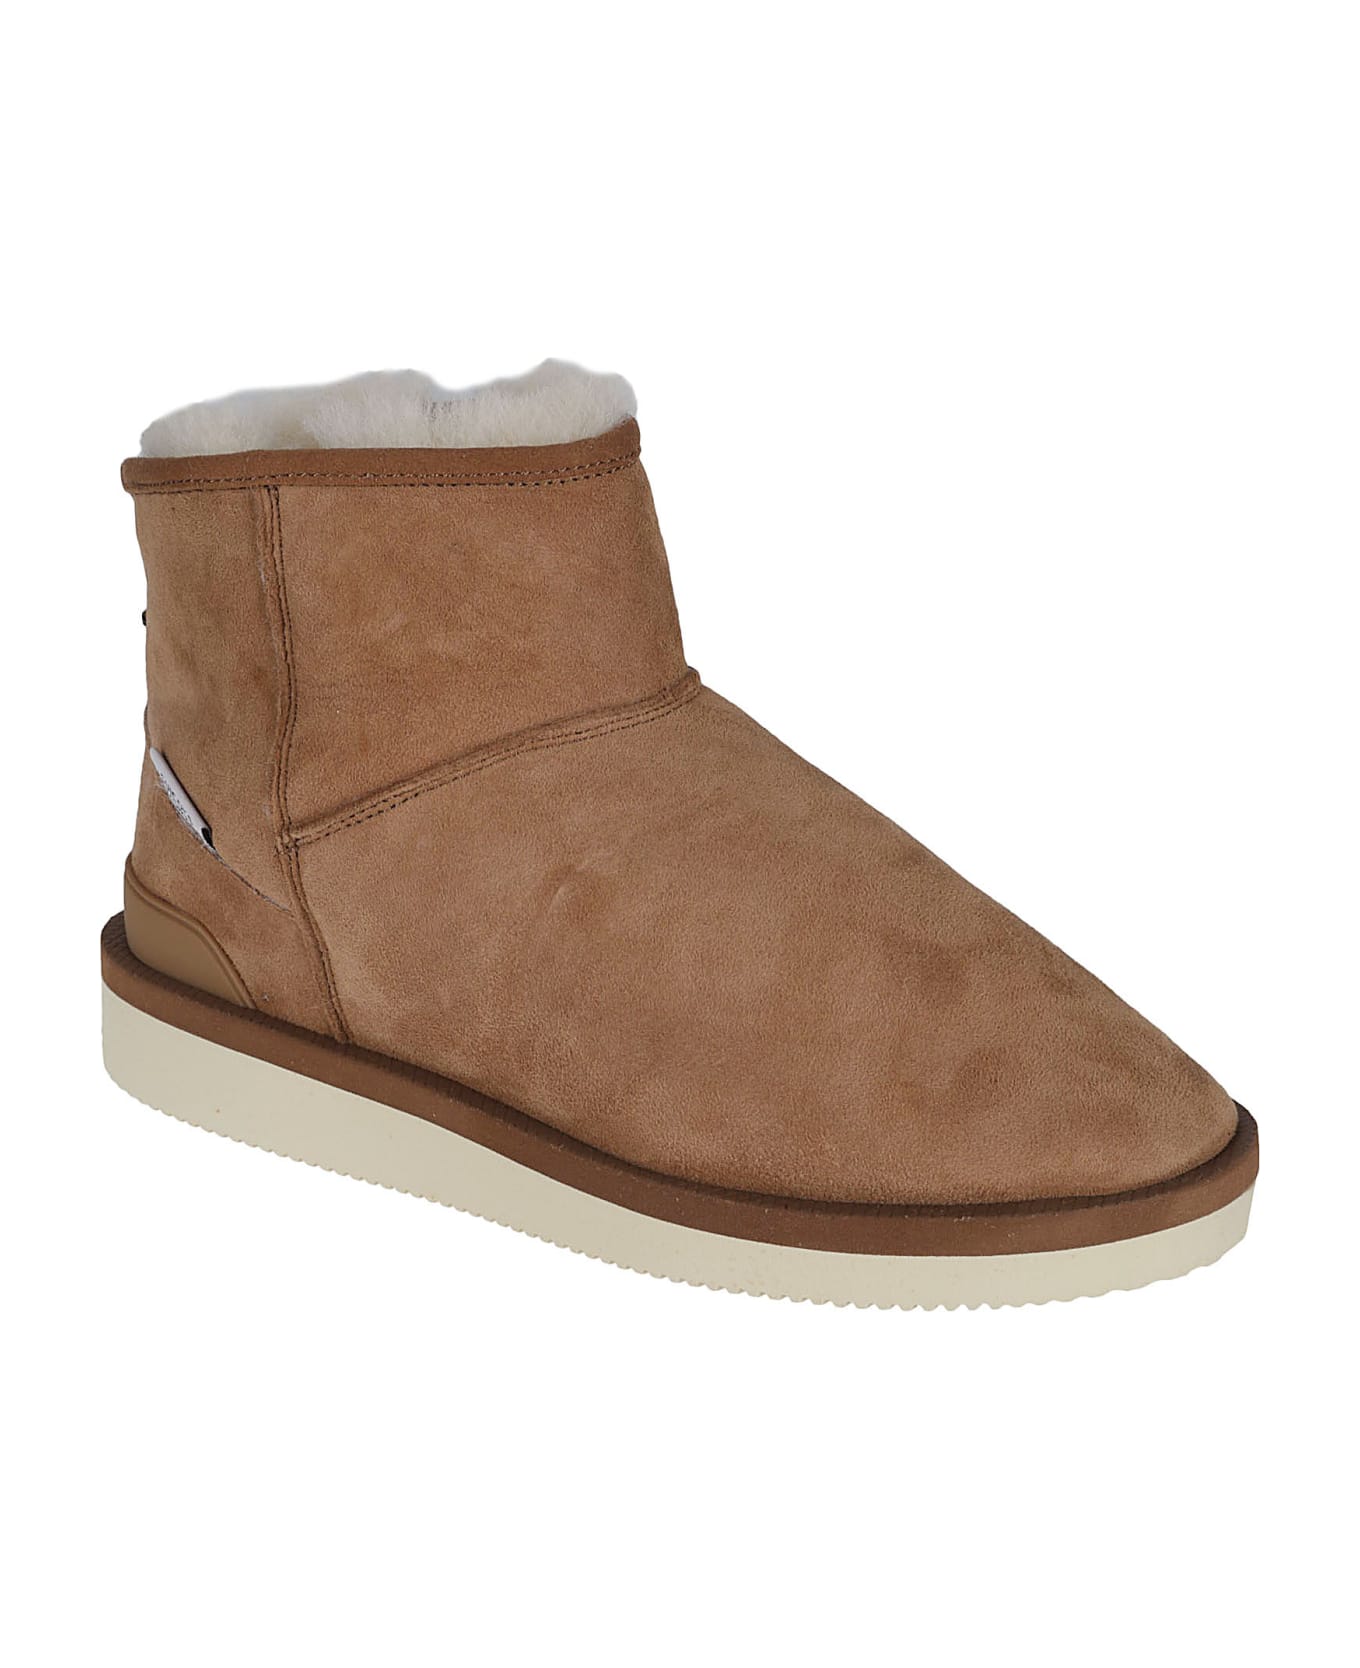 SUICOKE Fur Detailed Boots - Brown